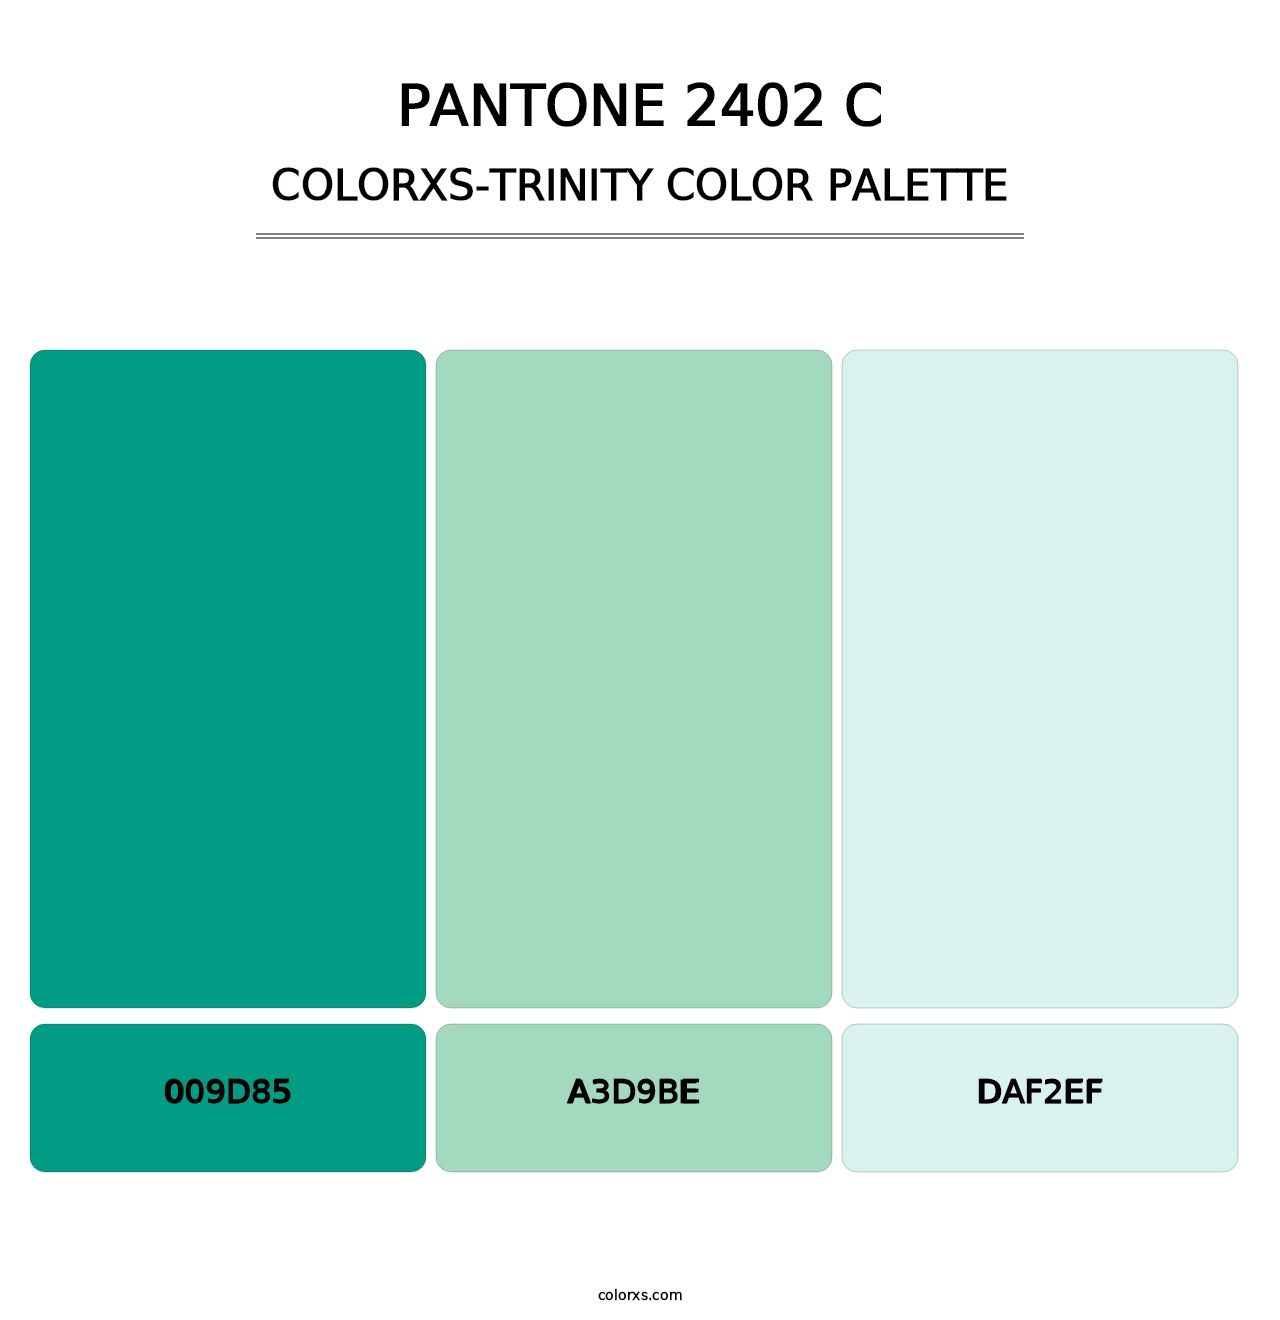 PANTONE 2402 C - Colorxs Trinity Palette